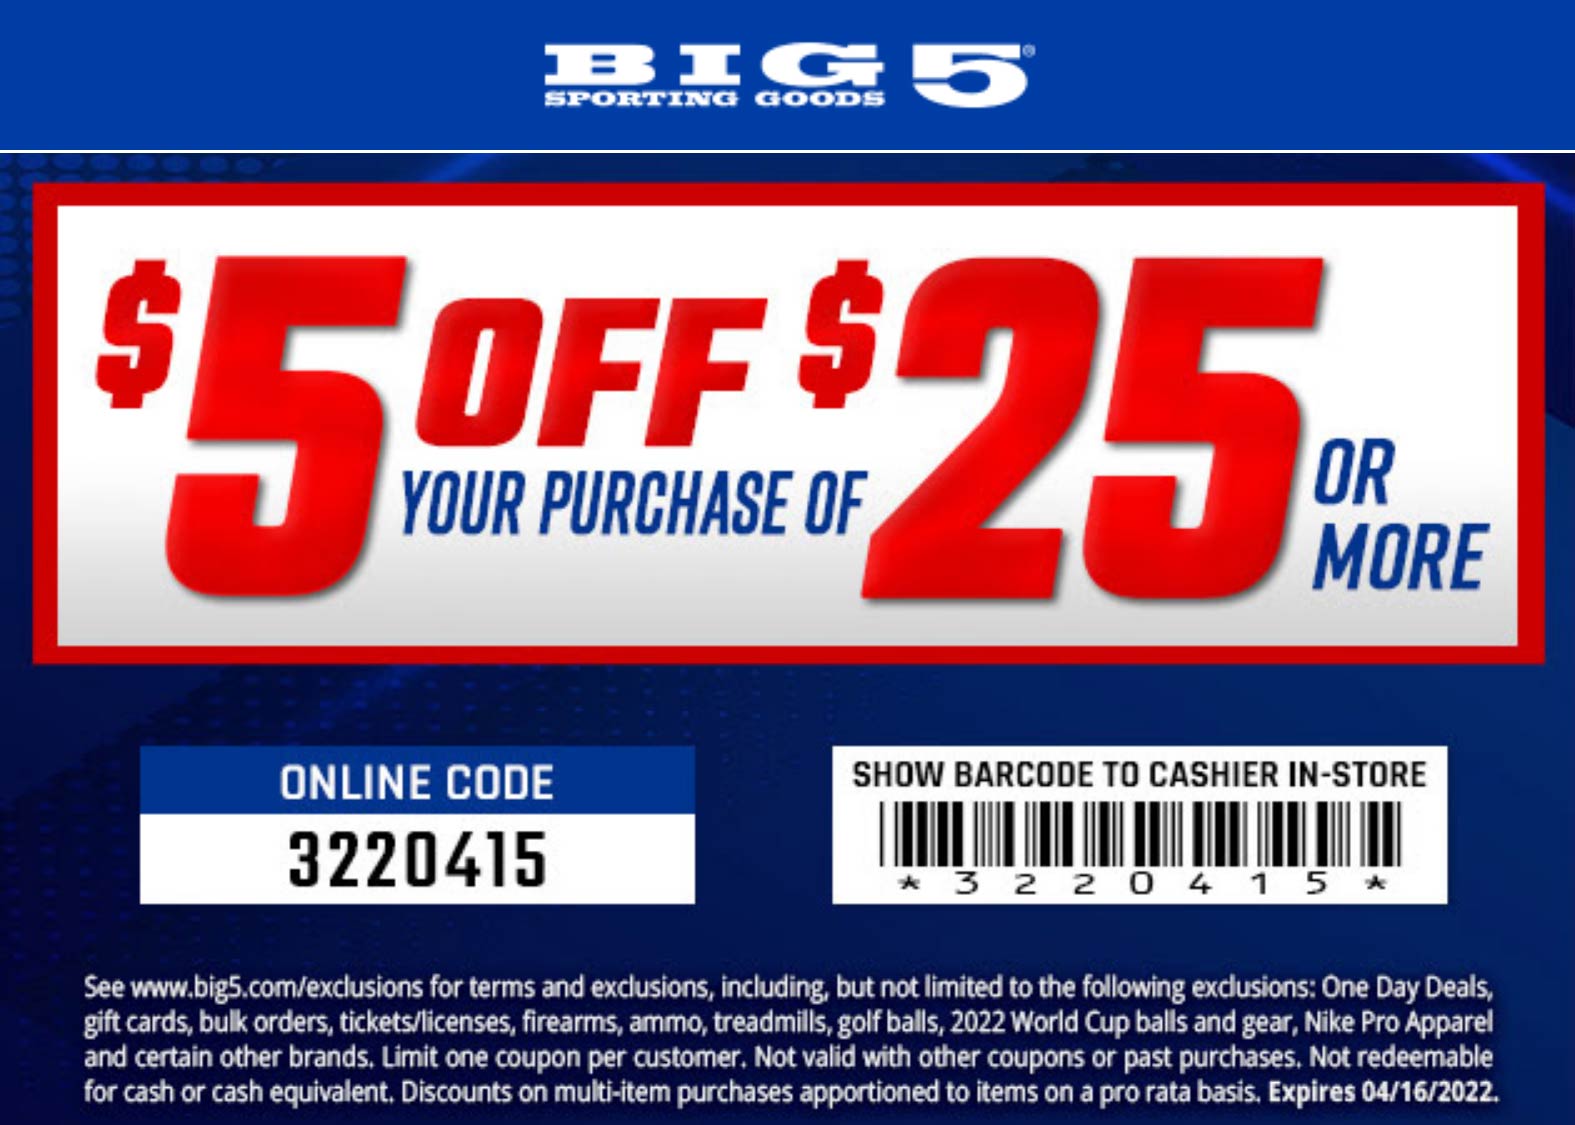 Big 5 stores Coupon  $5 off $25 at Big 5 sporting goods, or online via promo code 3220415 #big5 